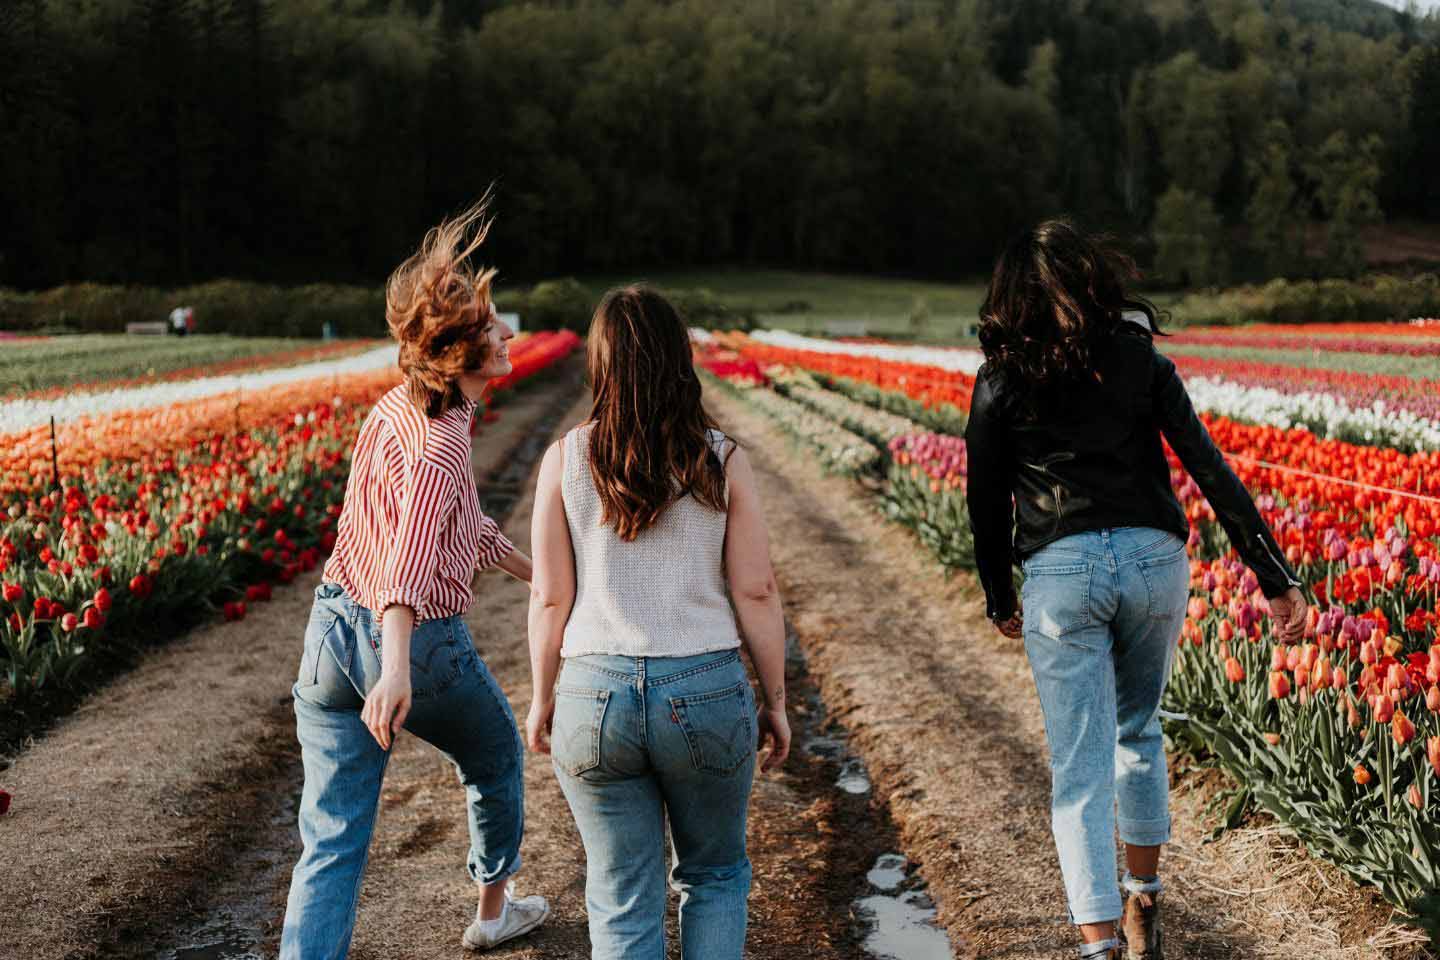 Three women happily strolling through a vibrant tulip field